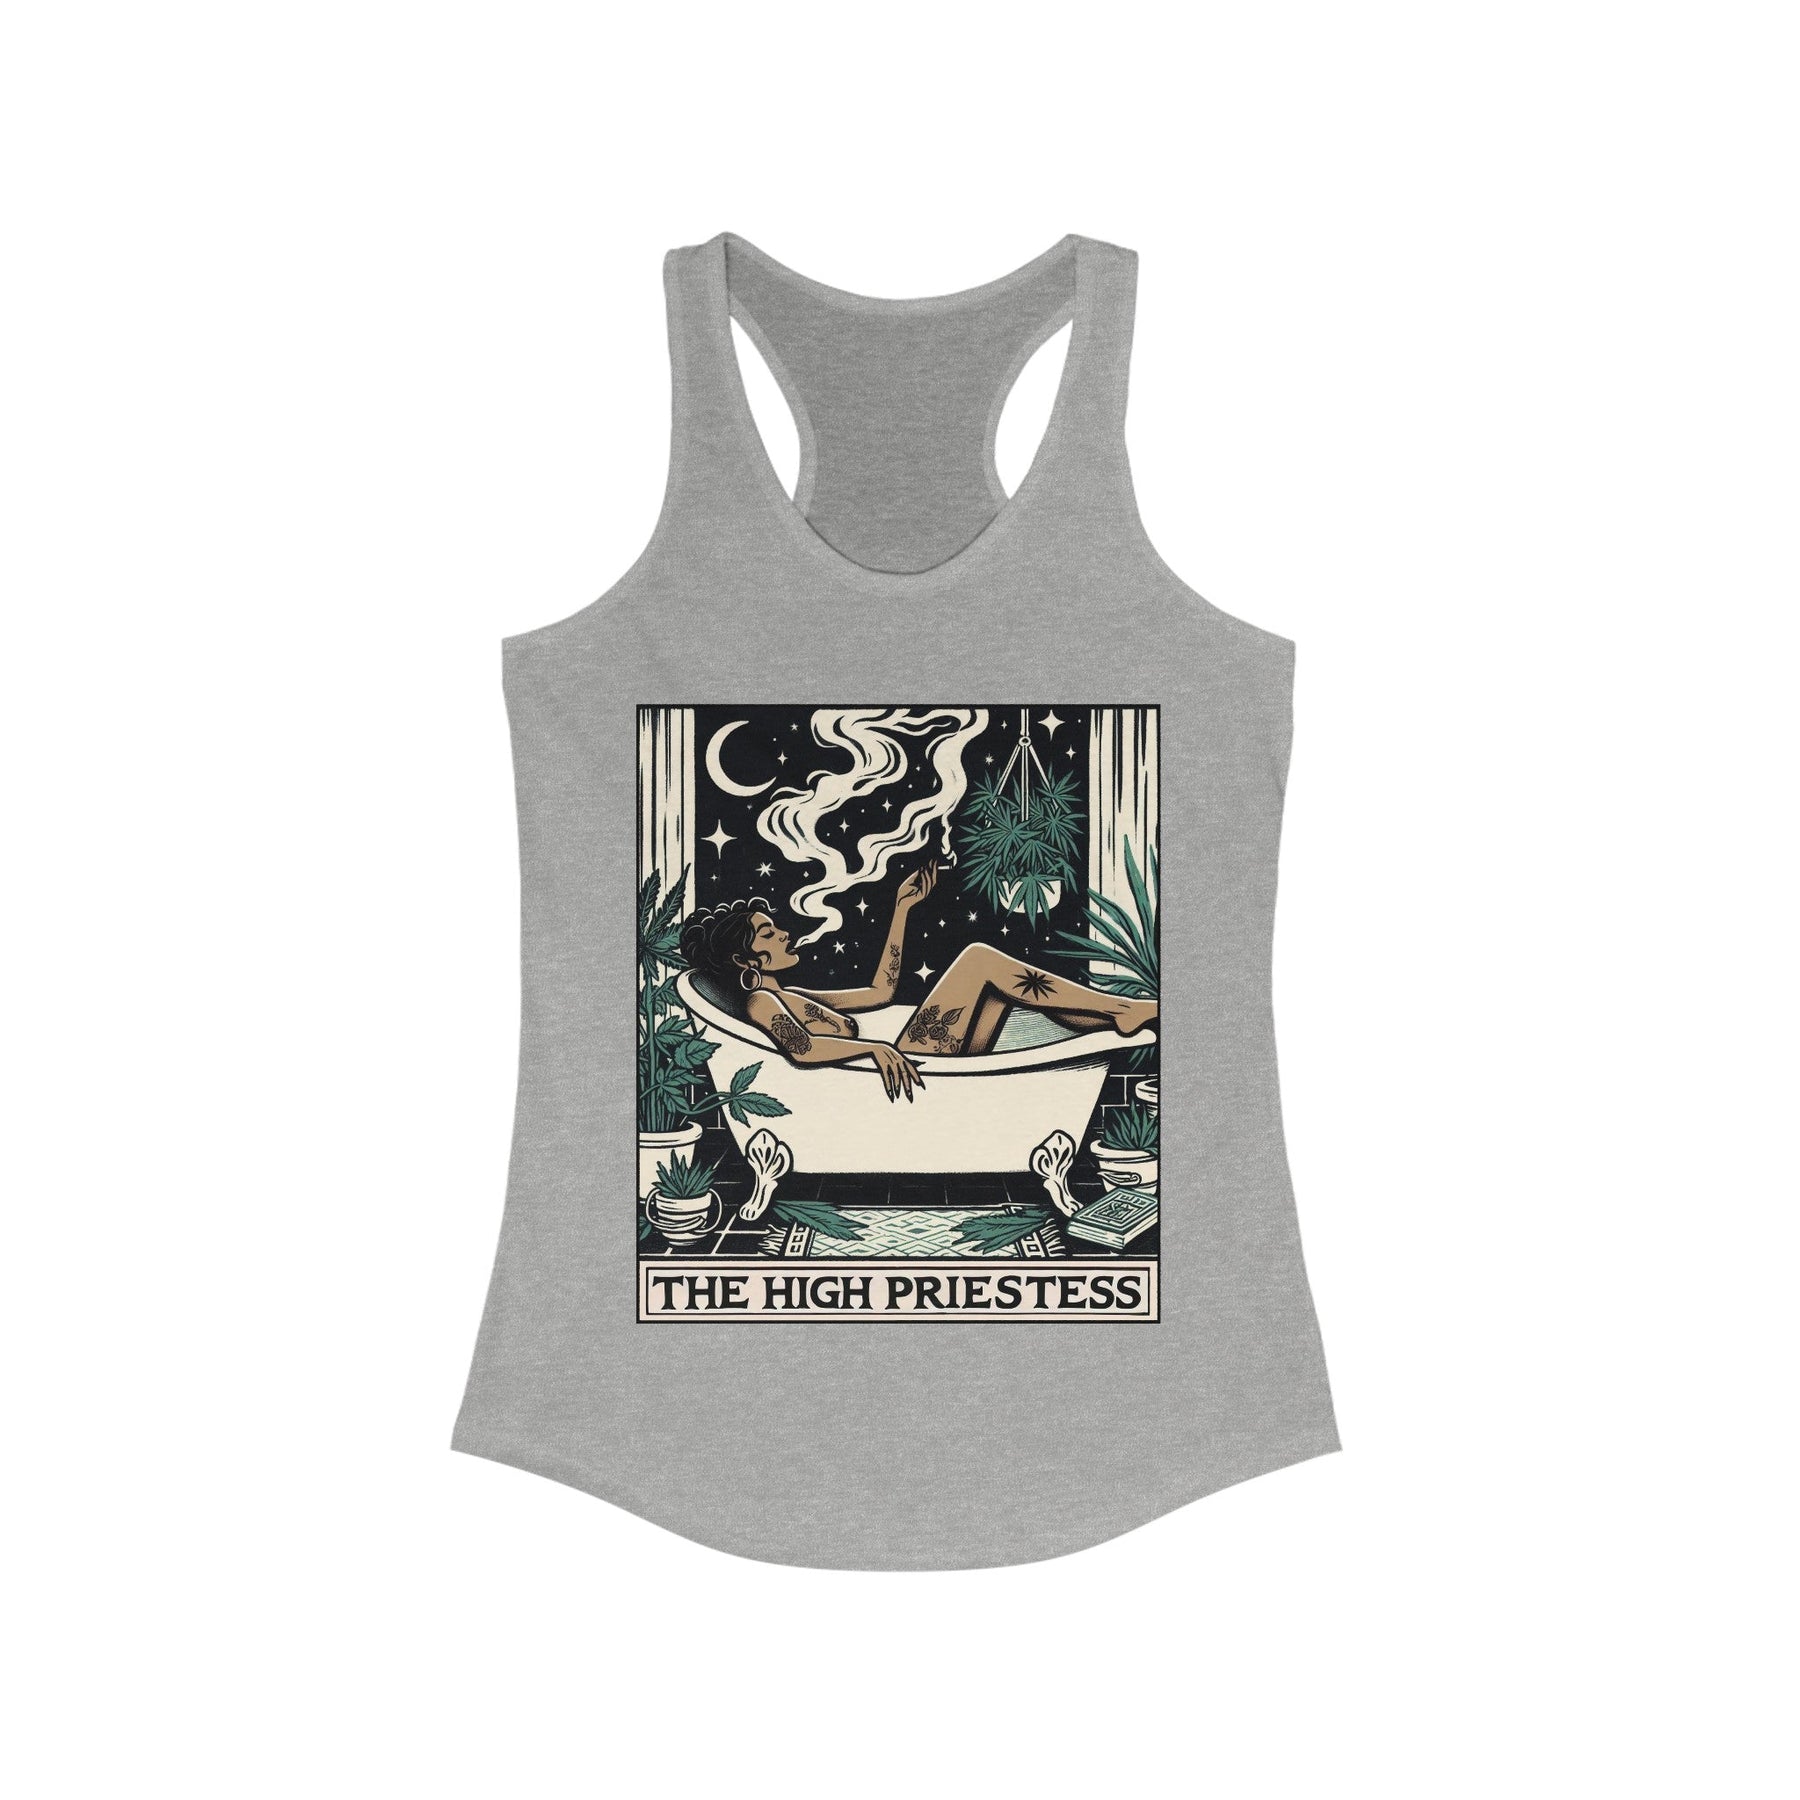 The High Priestess Goddess Women's Racerback Tank - Goth Cloth Co.Tank Top25466051555074526621